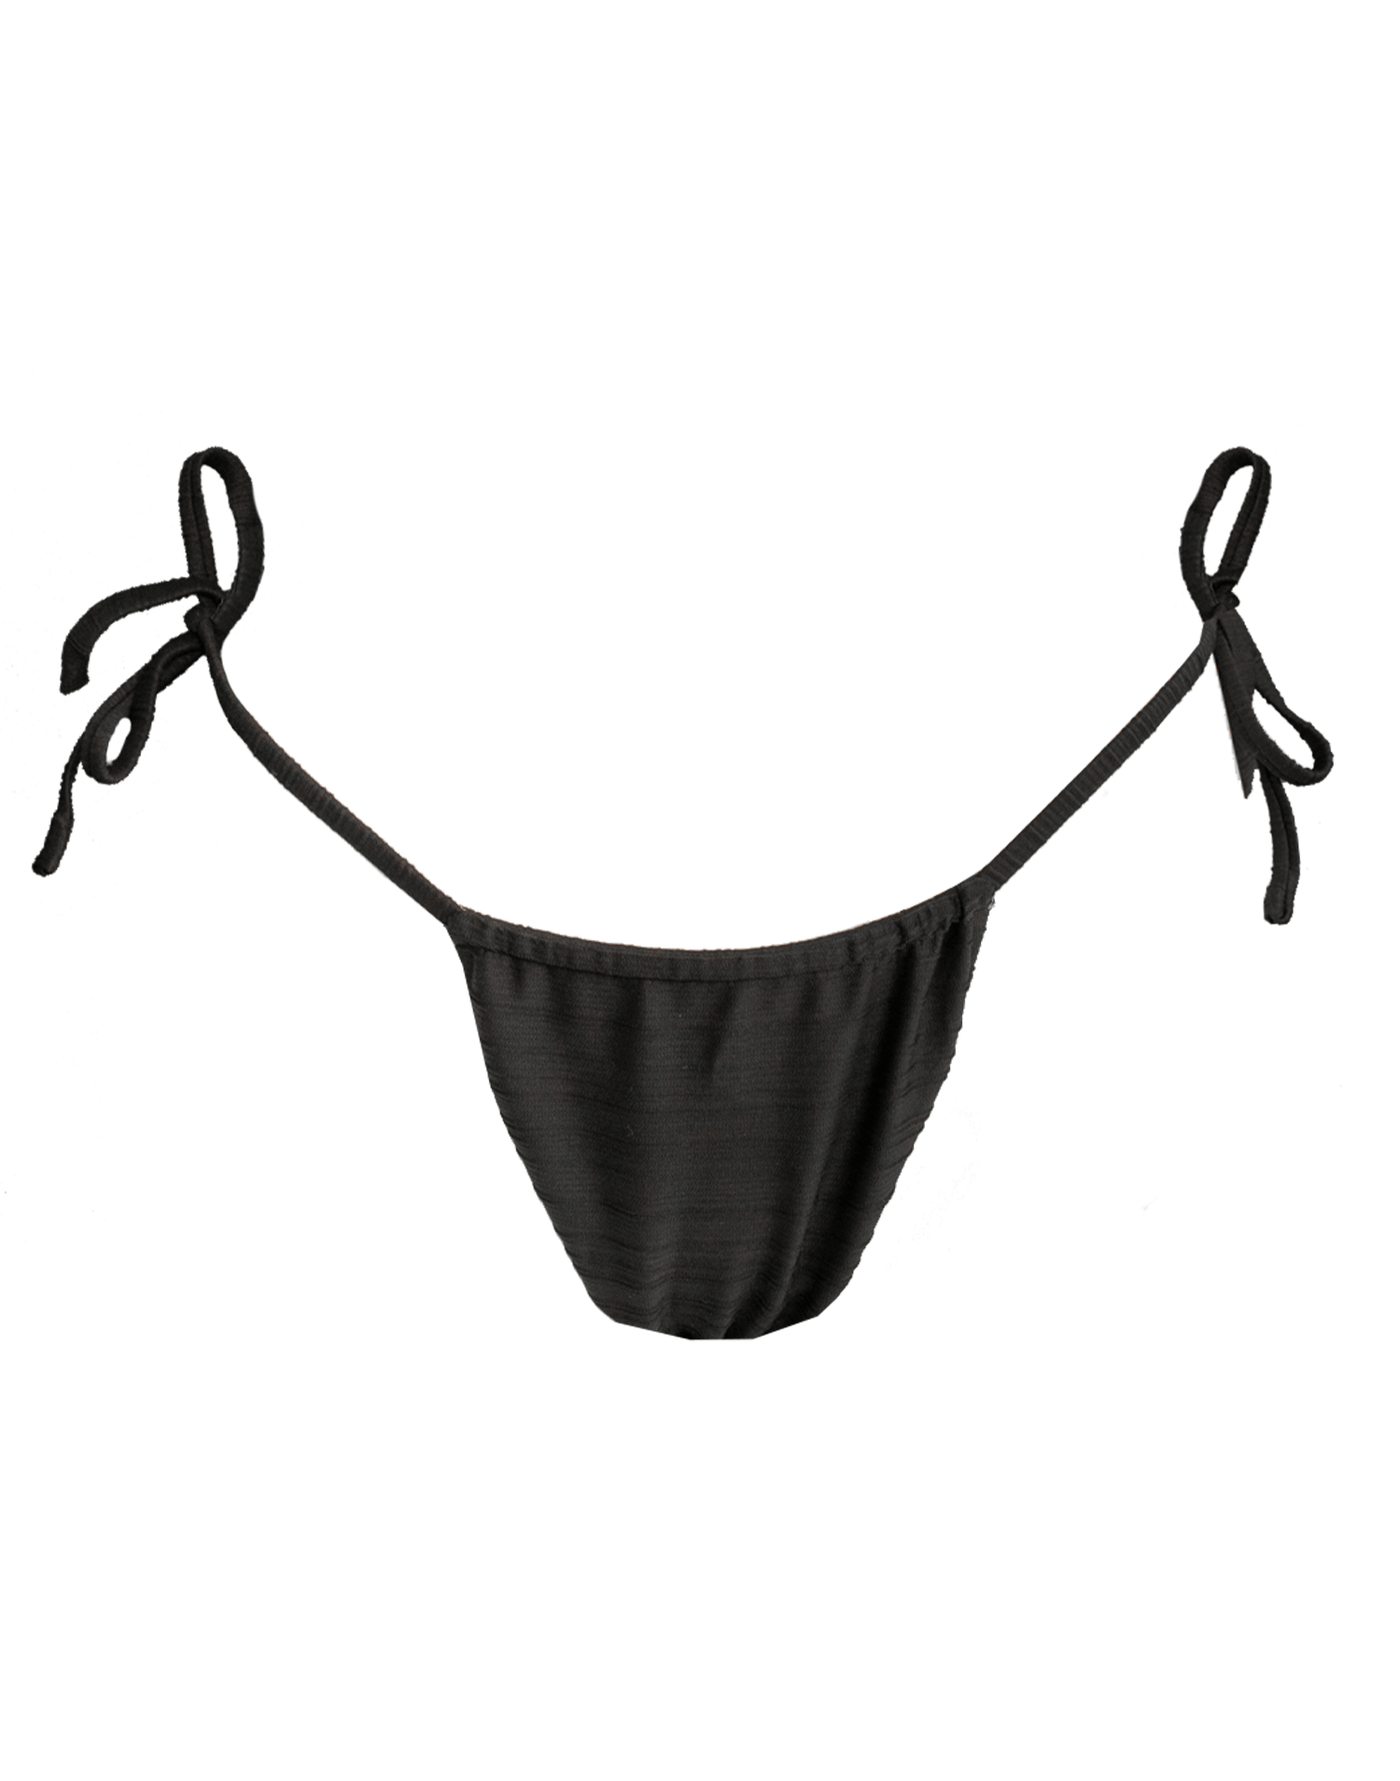 Quartz Side Tie Bottom (Black) - Cheeky Side Tie Bikini Bottom - Women's Swim - Charcoal Clothing mix-and-match